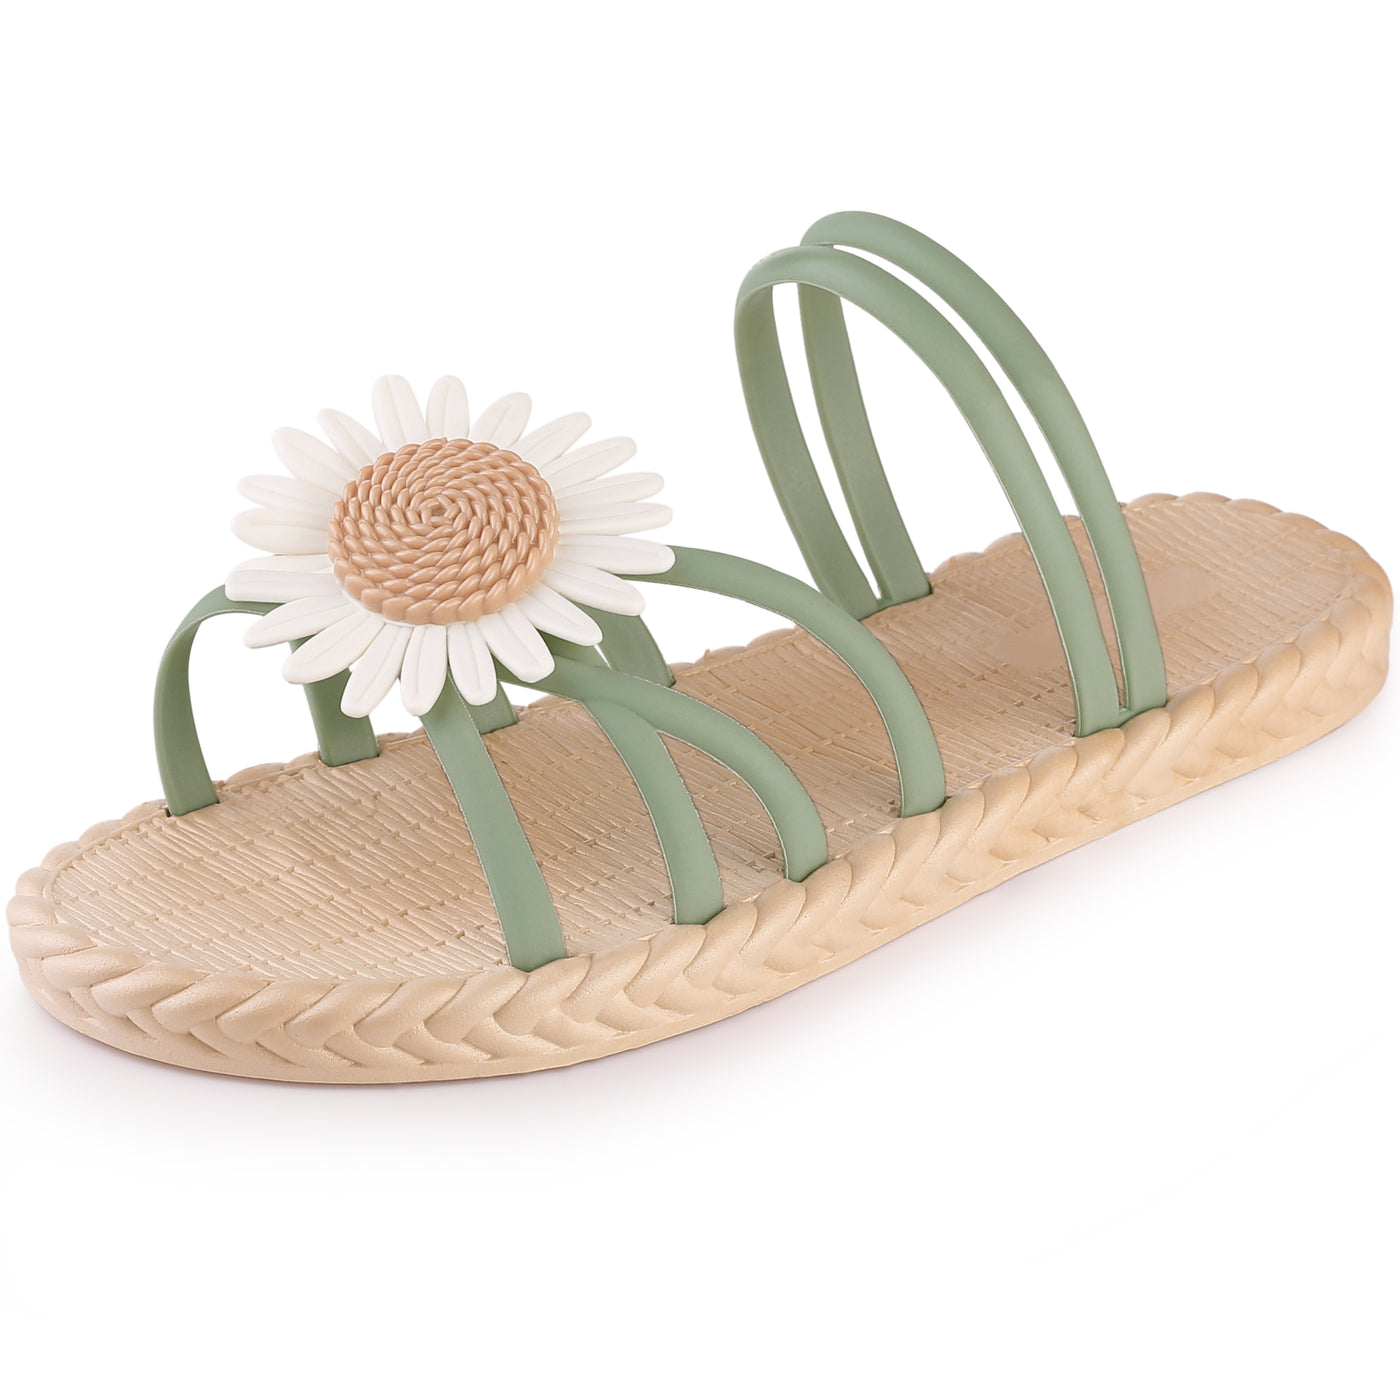 Allegra K Women's Floral Sandals Slip on Slippers Open Toe Flats Sandals